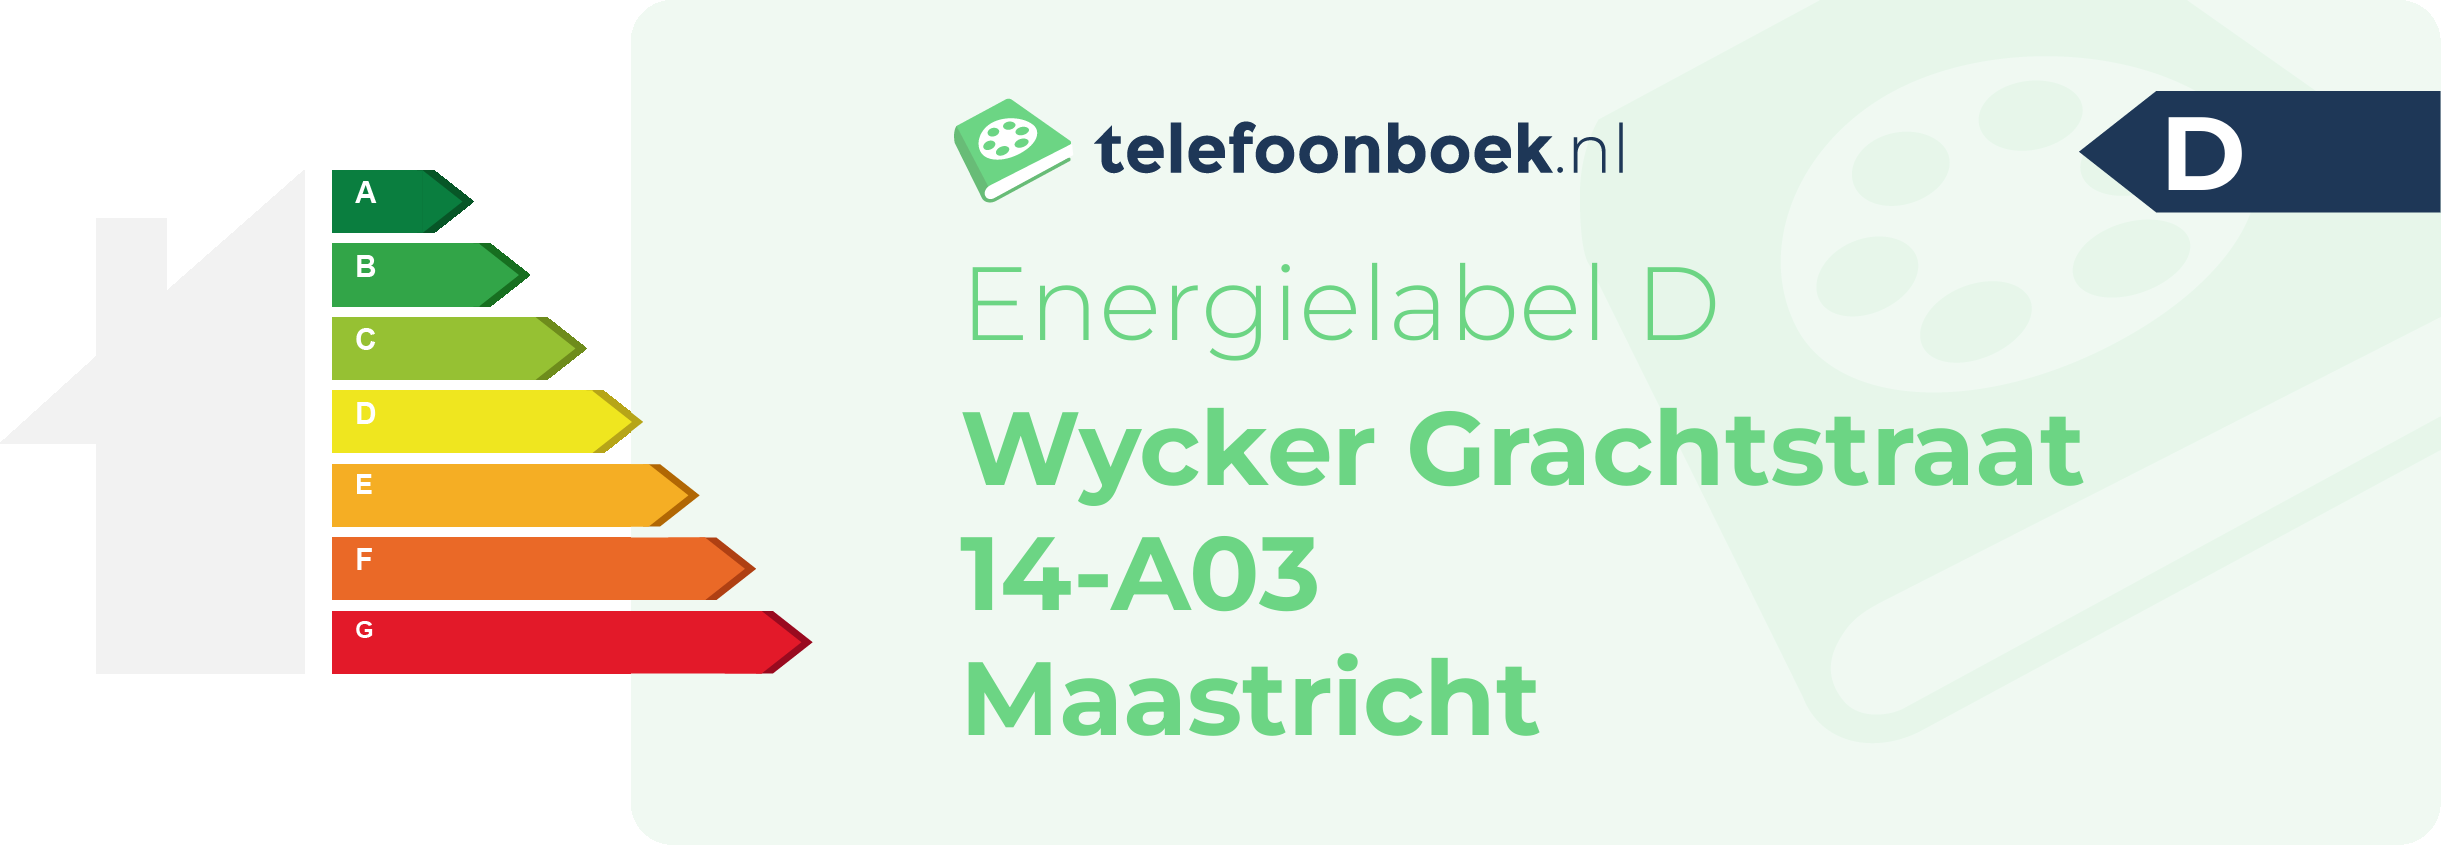 Energielabel Wycker Grachtstraat 14-A03 Maastricht